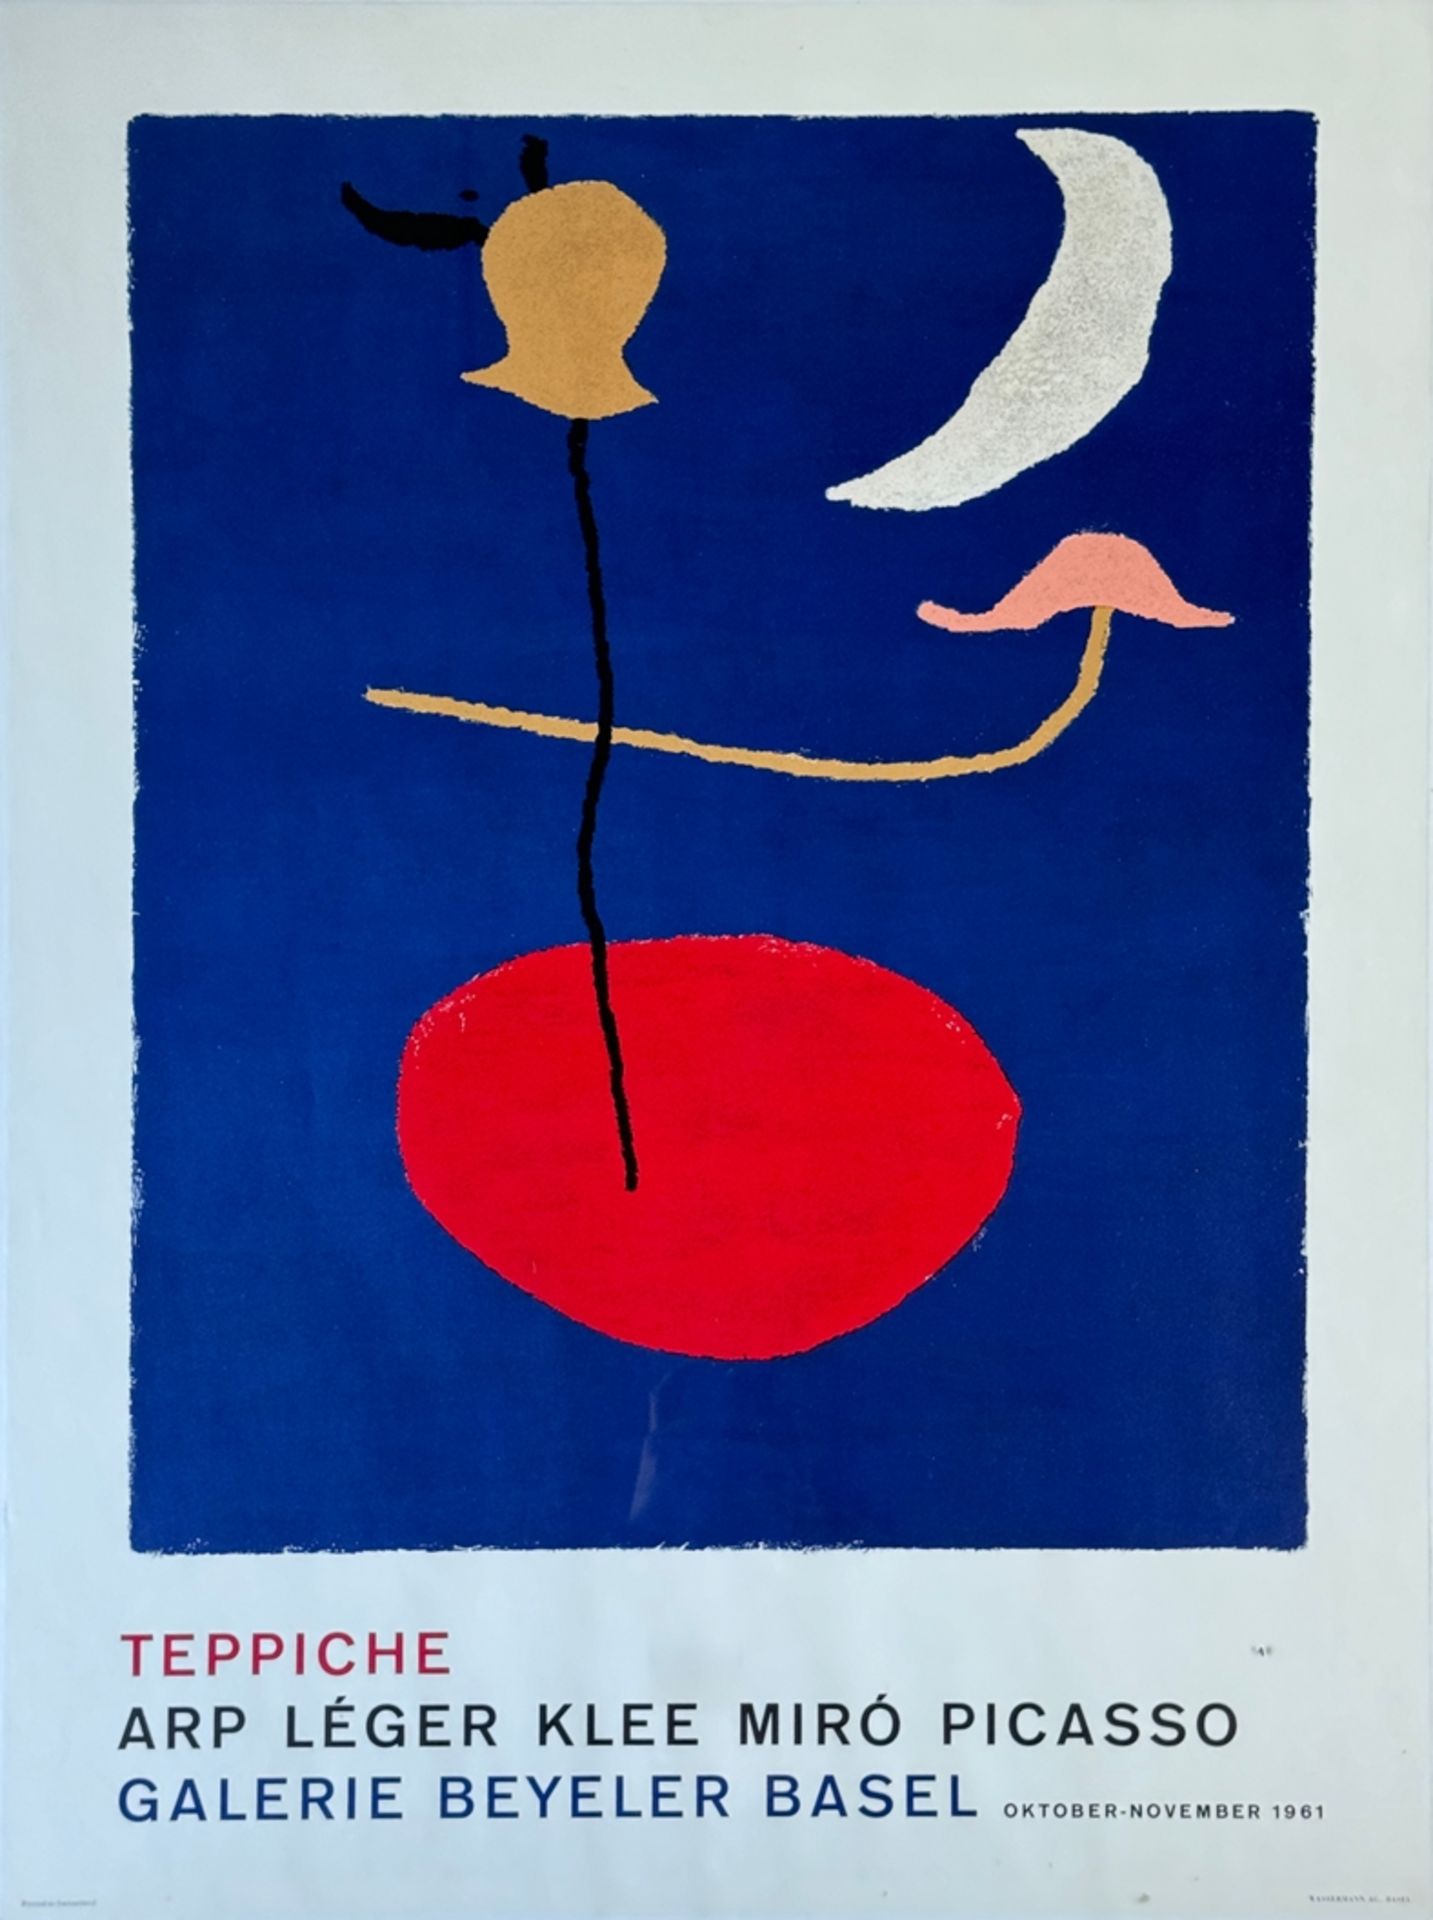 Ausstellungsplakat "Teppiche", Galerie Beyeler Basel, Oktober-November 1961, Ausstellung mit Jean A